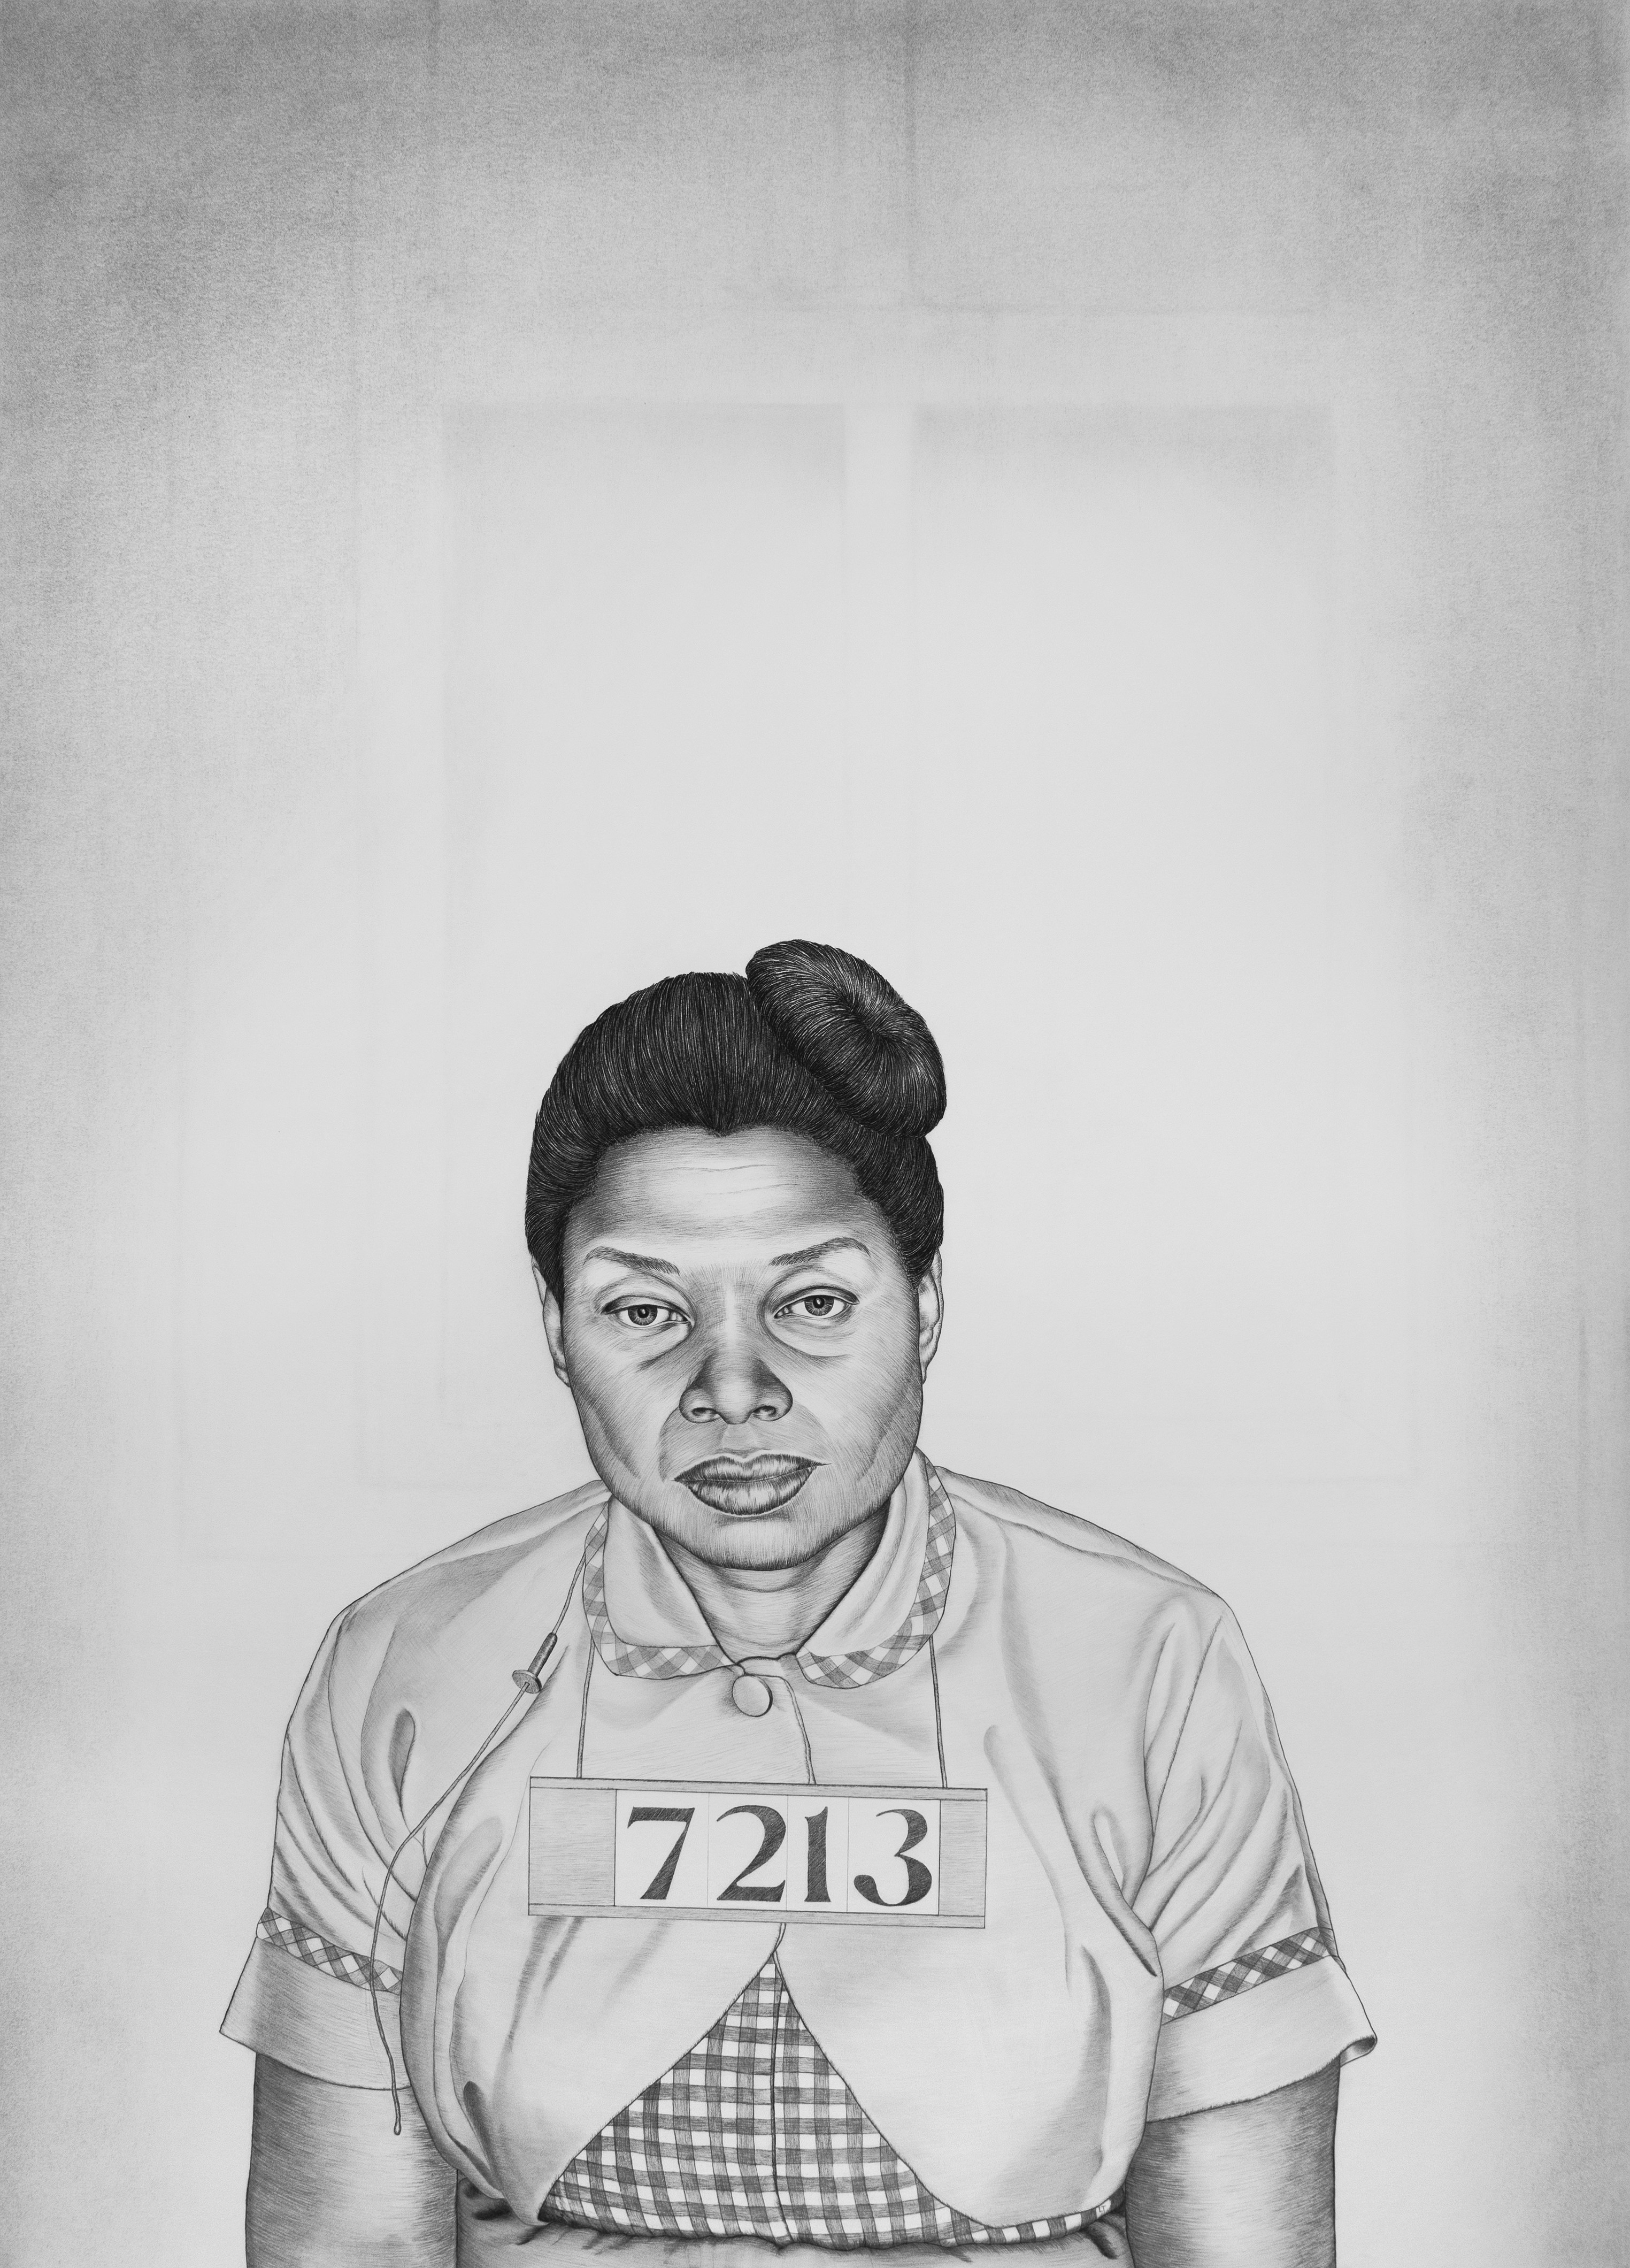 Mugshot Portraits: Women of the Montgomery Bus Boycott, Charlie Mae Slaughter (2018), di Lava Thomas. [Ph. Courtesy Lava Thomas e / and Rena Bransten Gallery]